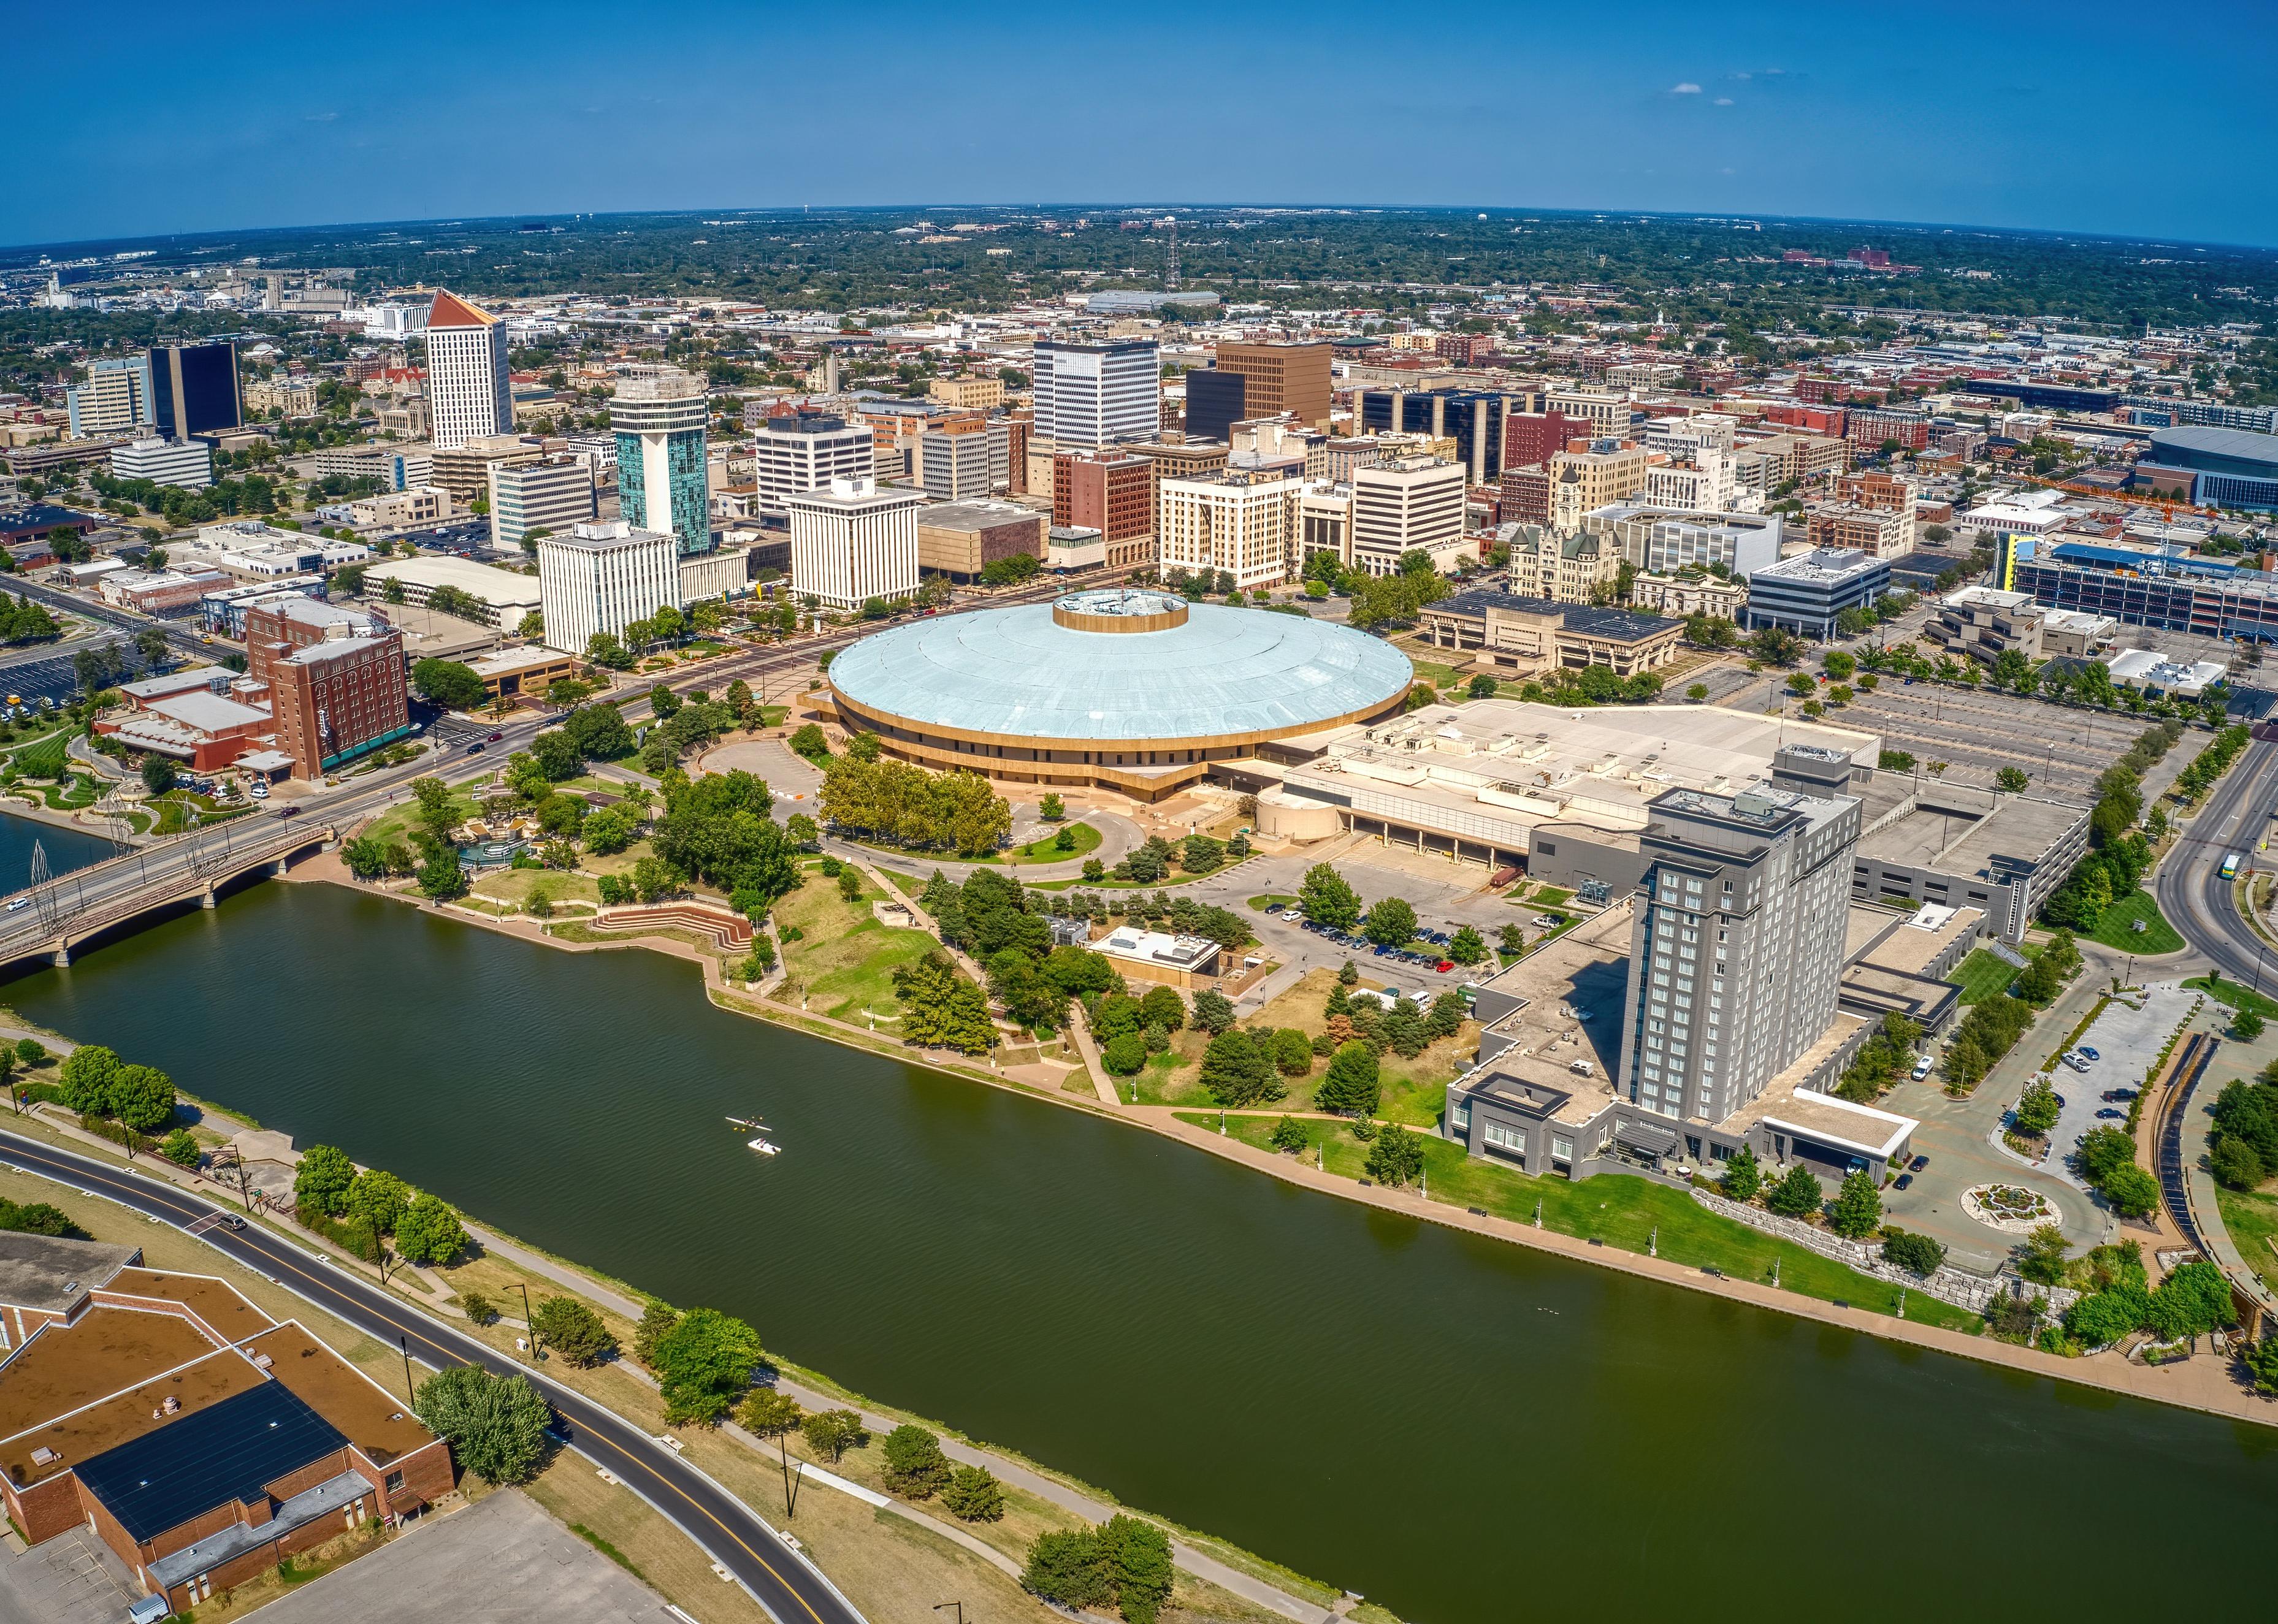 Aerial view of Wichita, Kansas